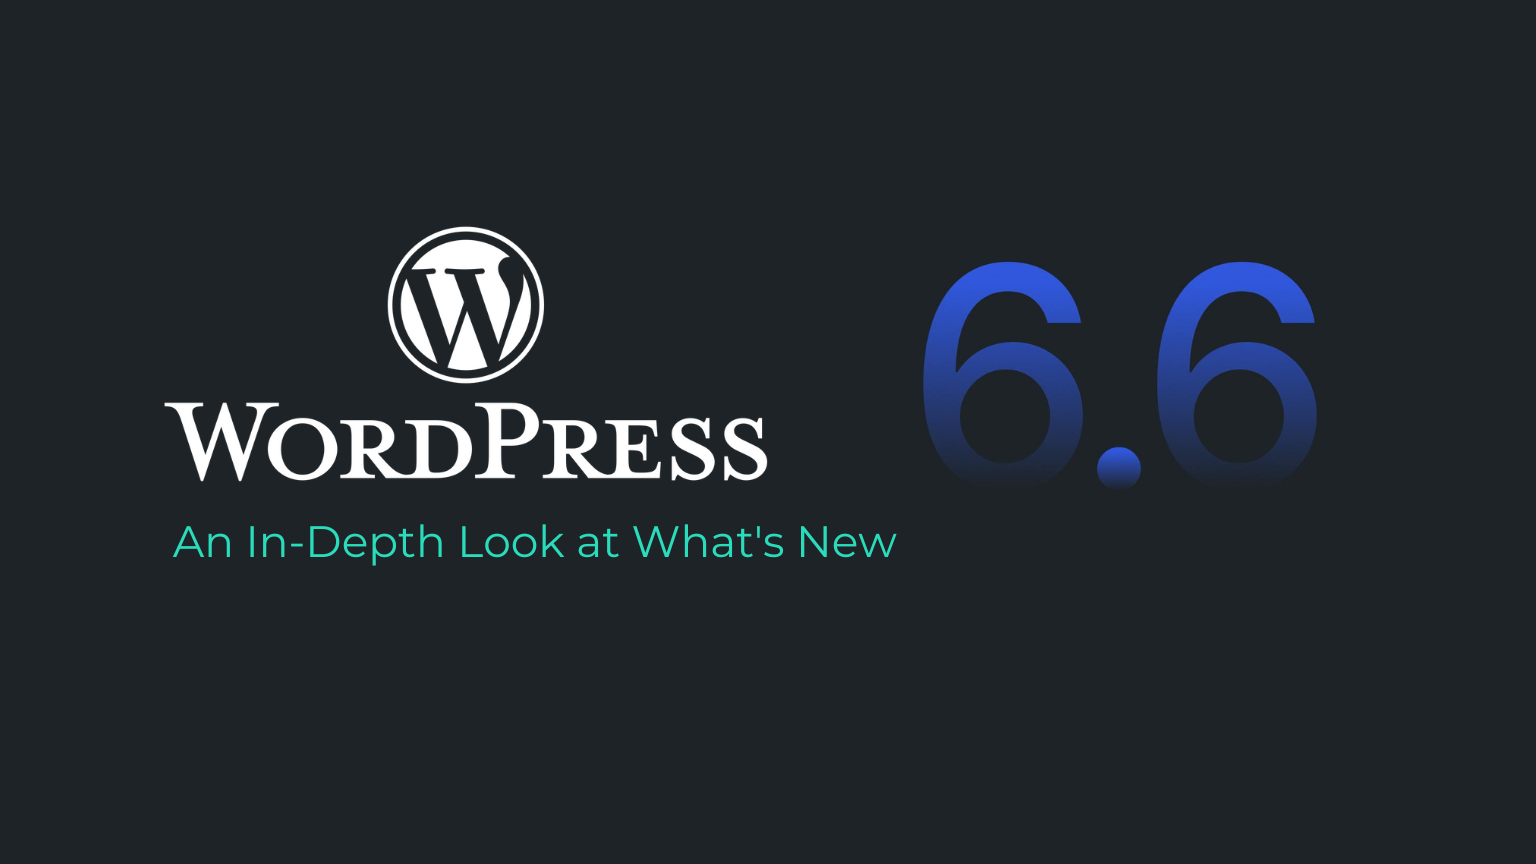 WordPress 6.6 Released